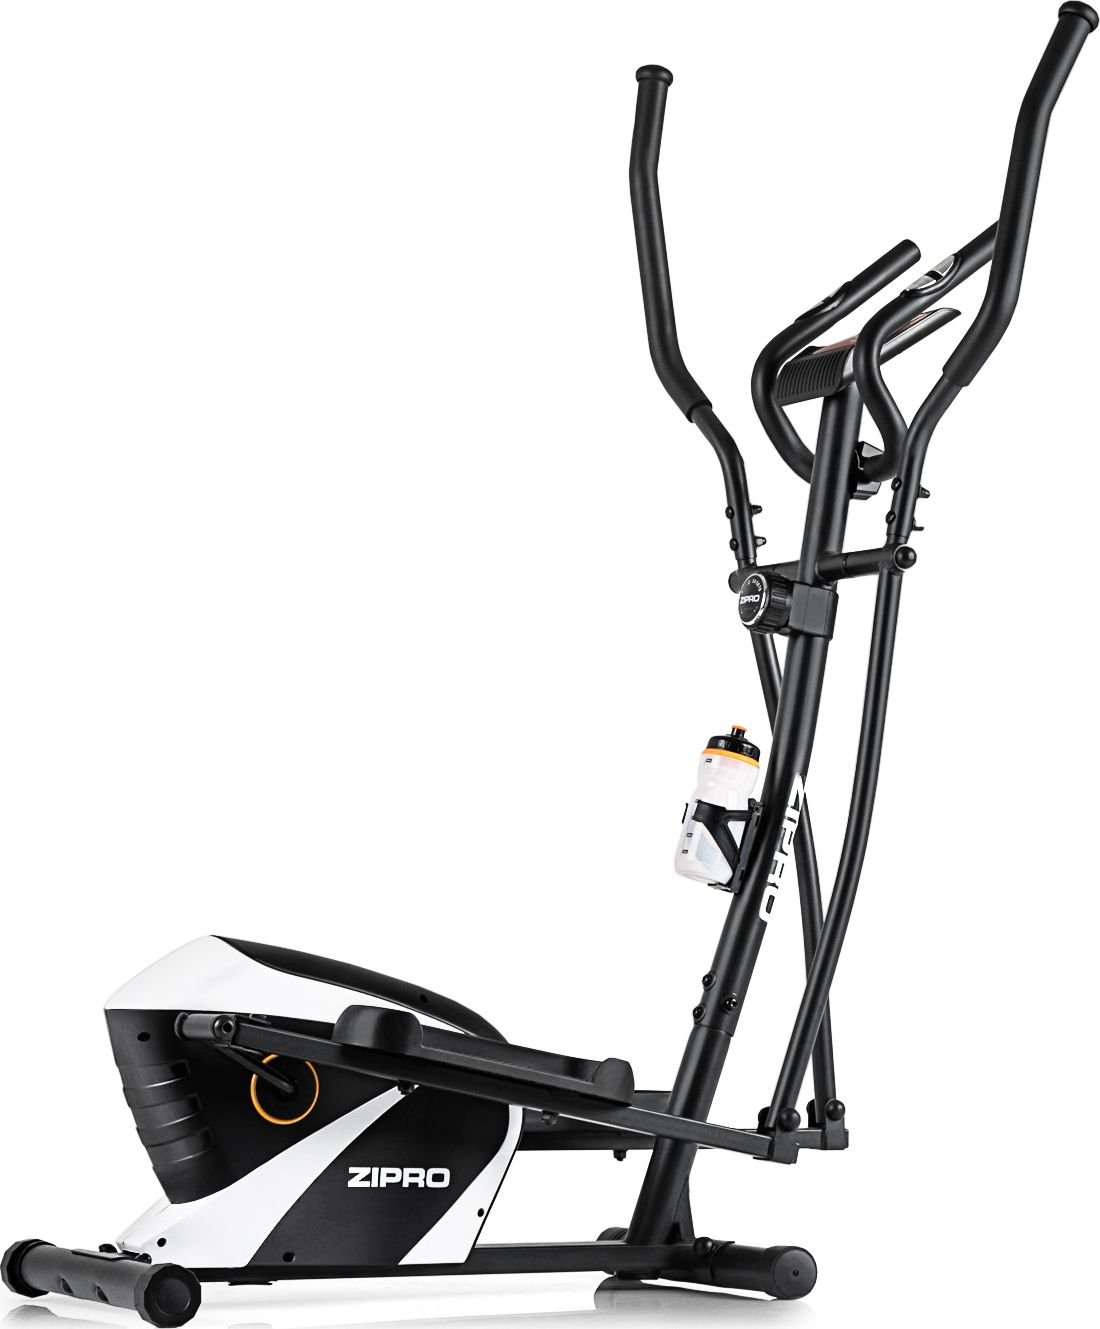 Biciclete fitness - Bicicleta Eliptica Fitness Magnetica Zipro Shox RS, Volanta 7 kg, Greutate maxima utilizator 120kg